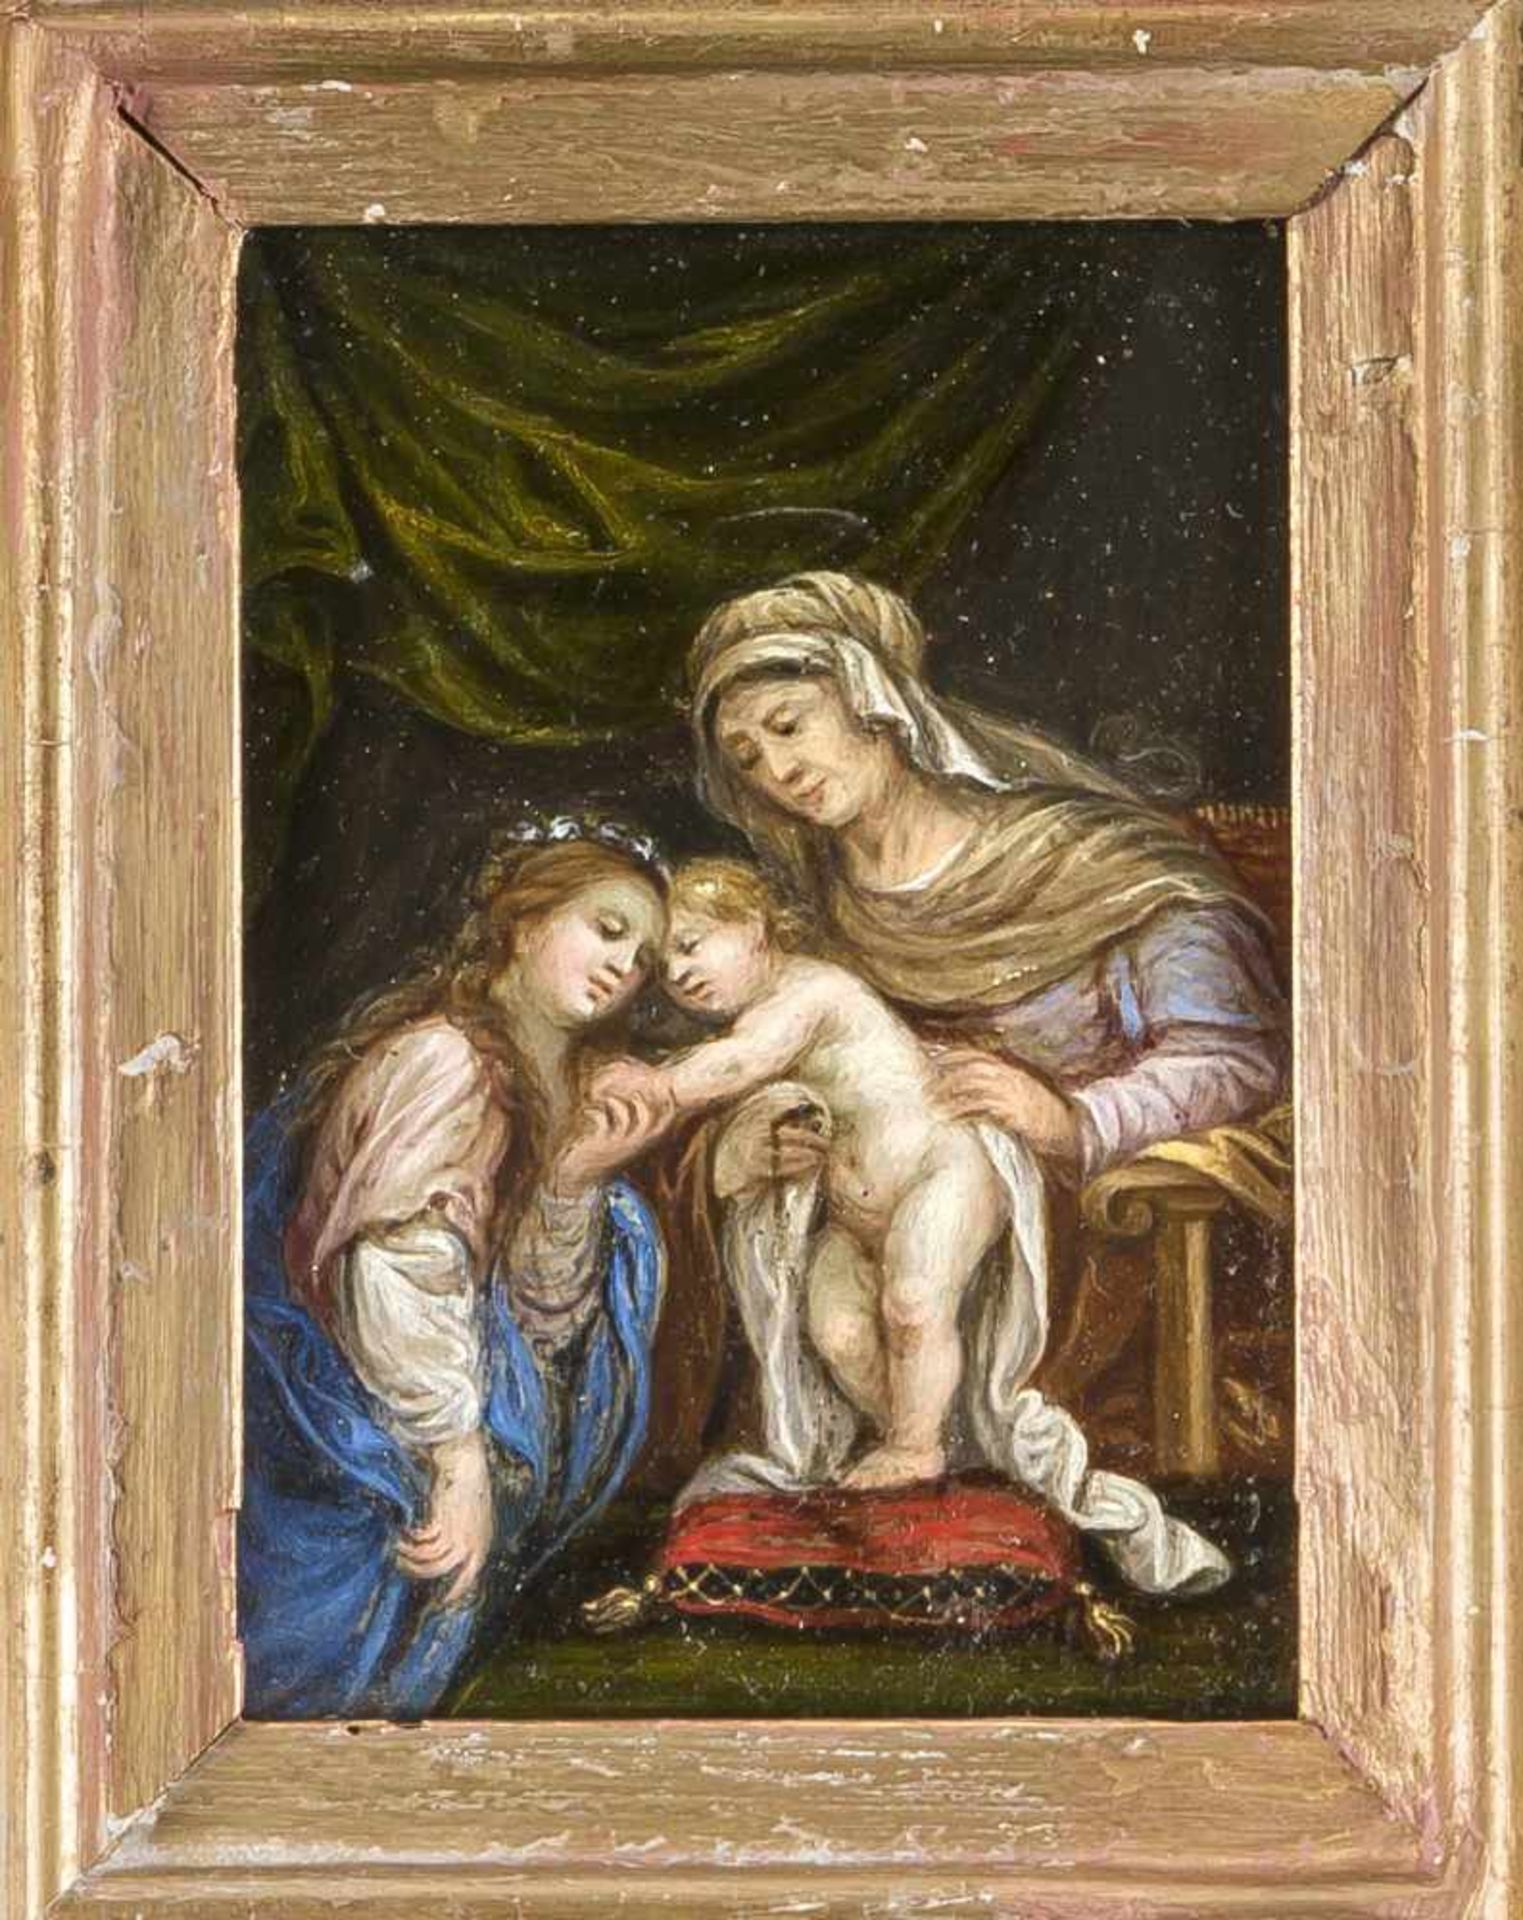 Anonymer Maler des 17./18. Jh., Anna selbdritt. Öl/Kupfer, unsigniert, wohl 16./17. Jh. Anna mit dem